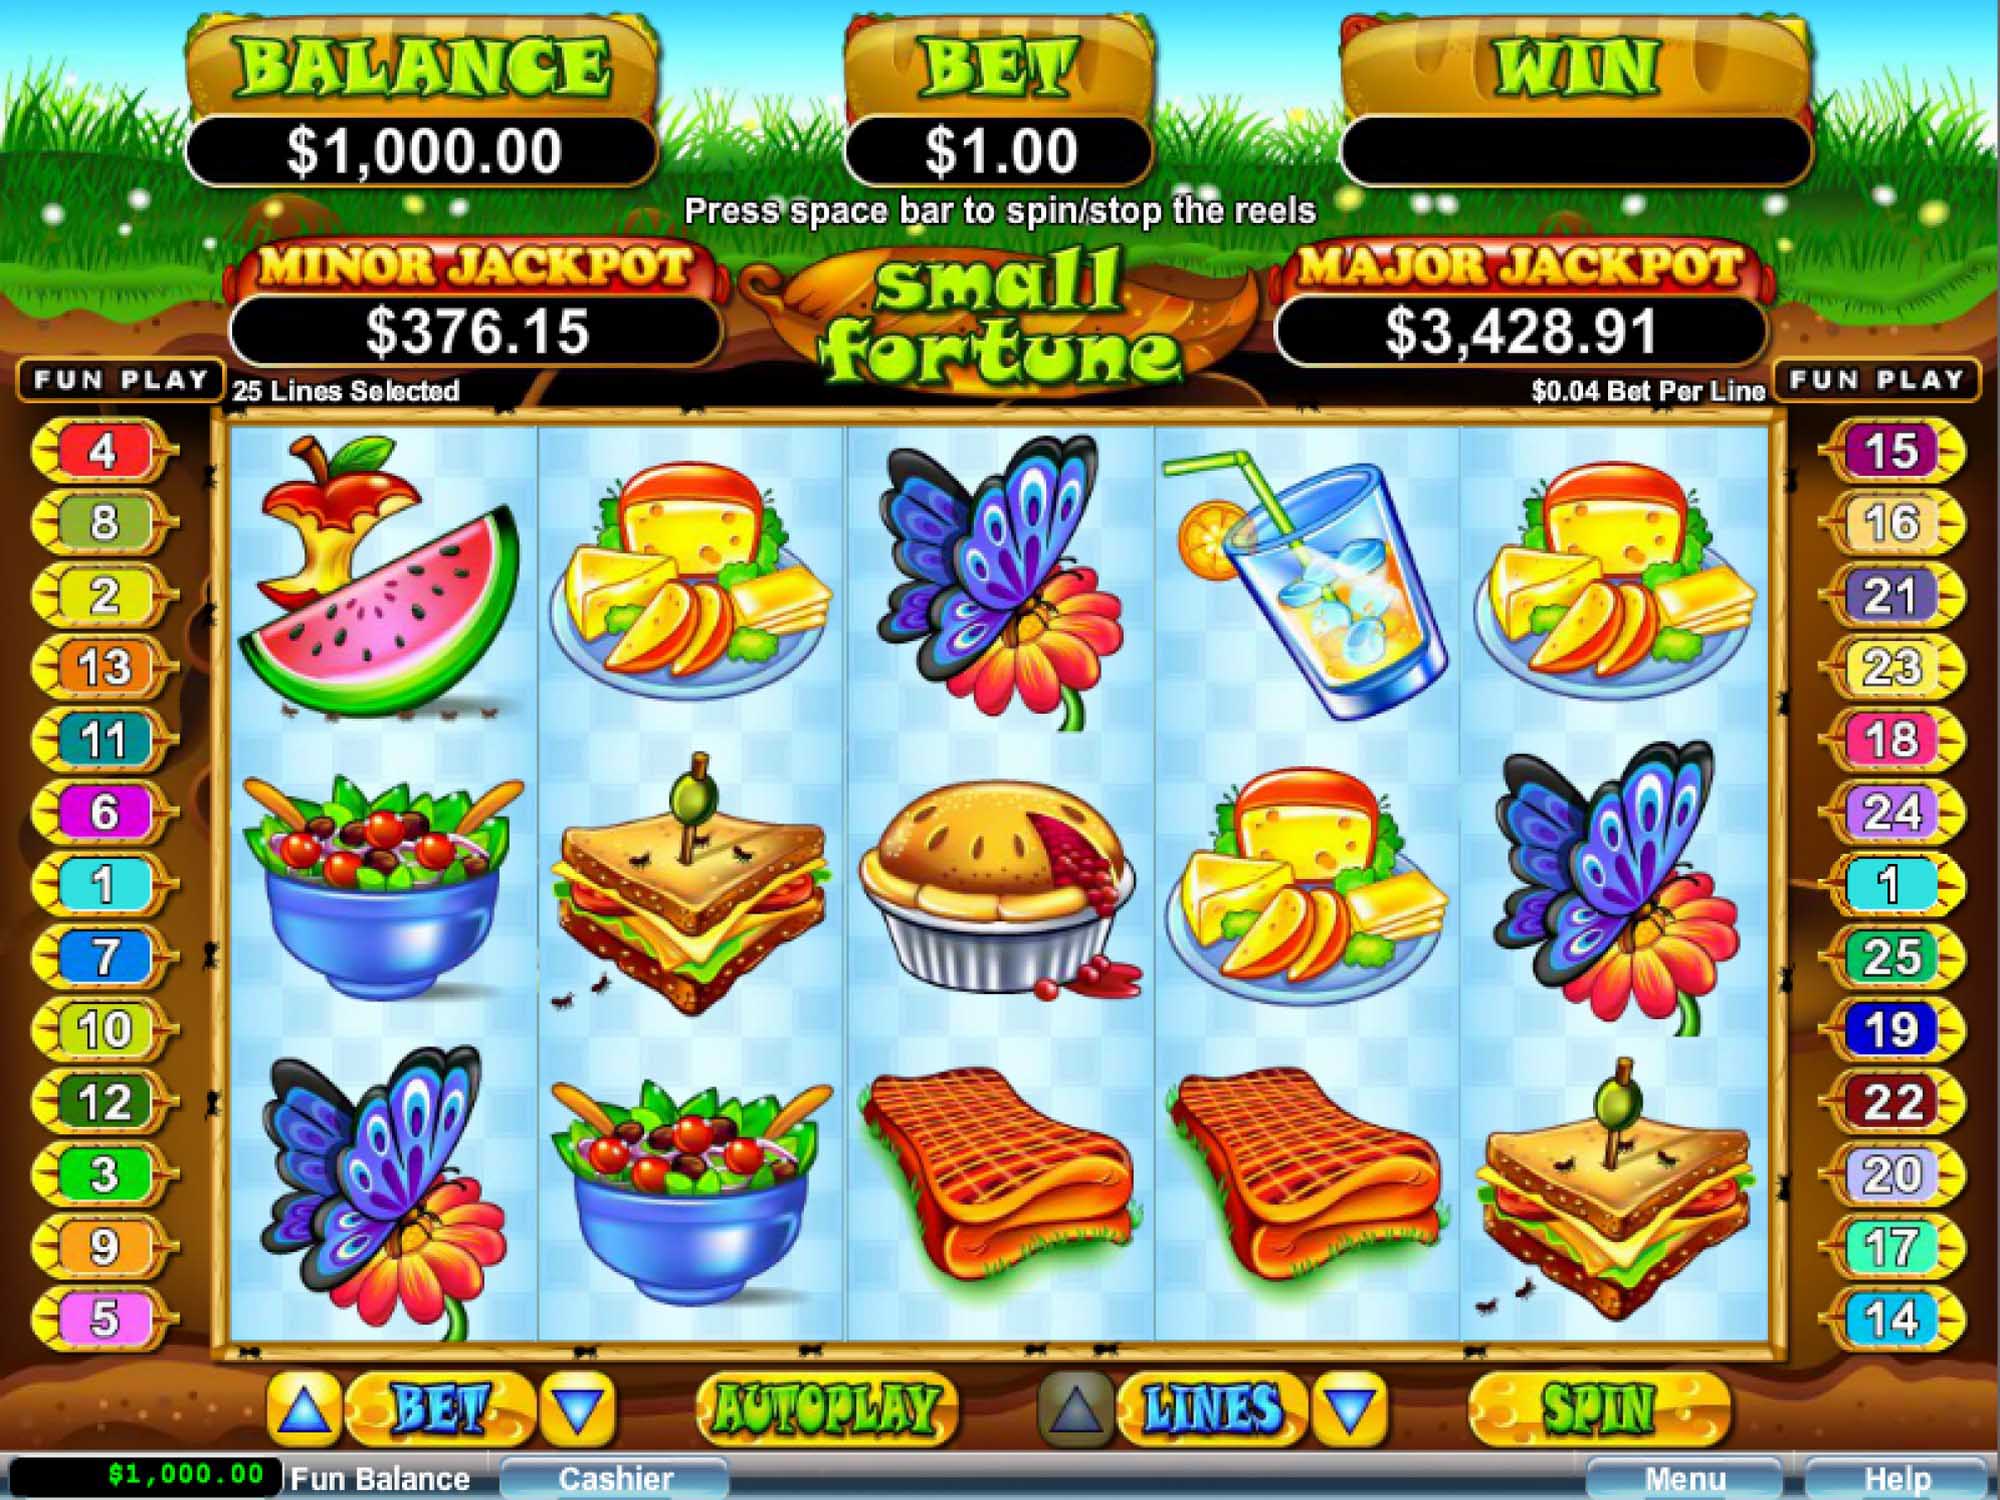 Small Fortune slot game screenshot